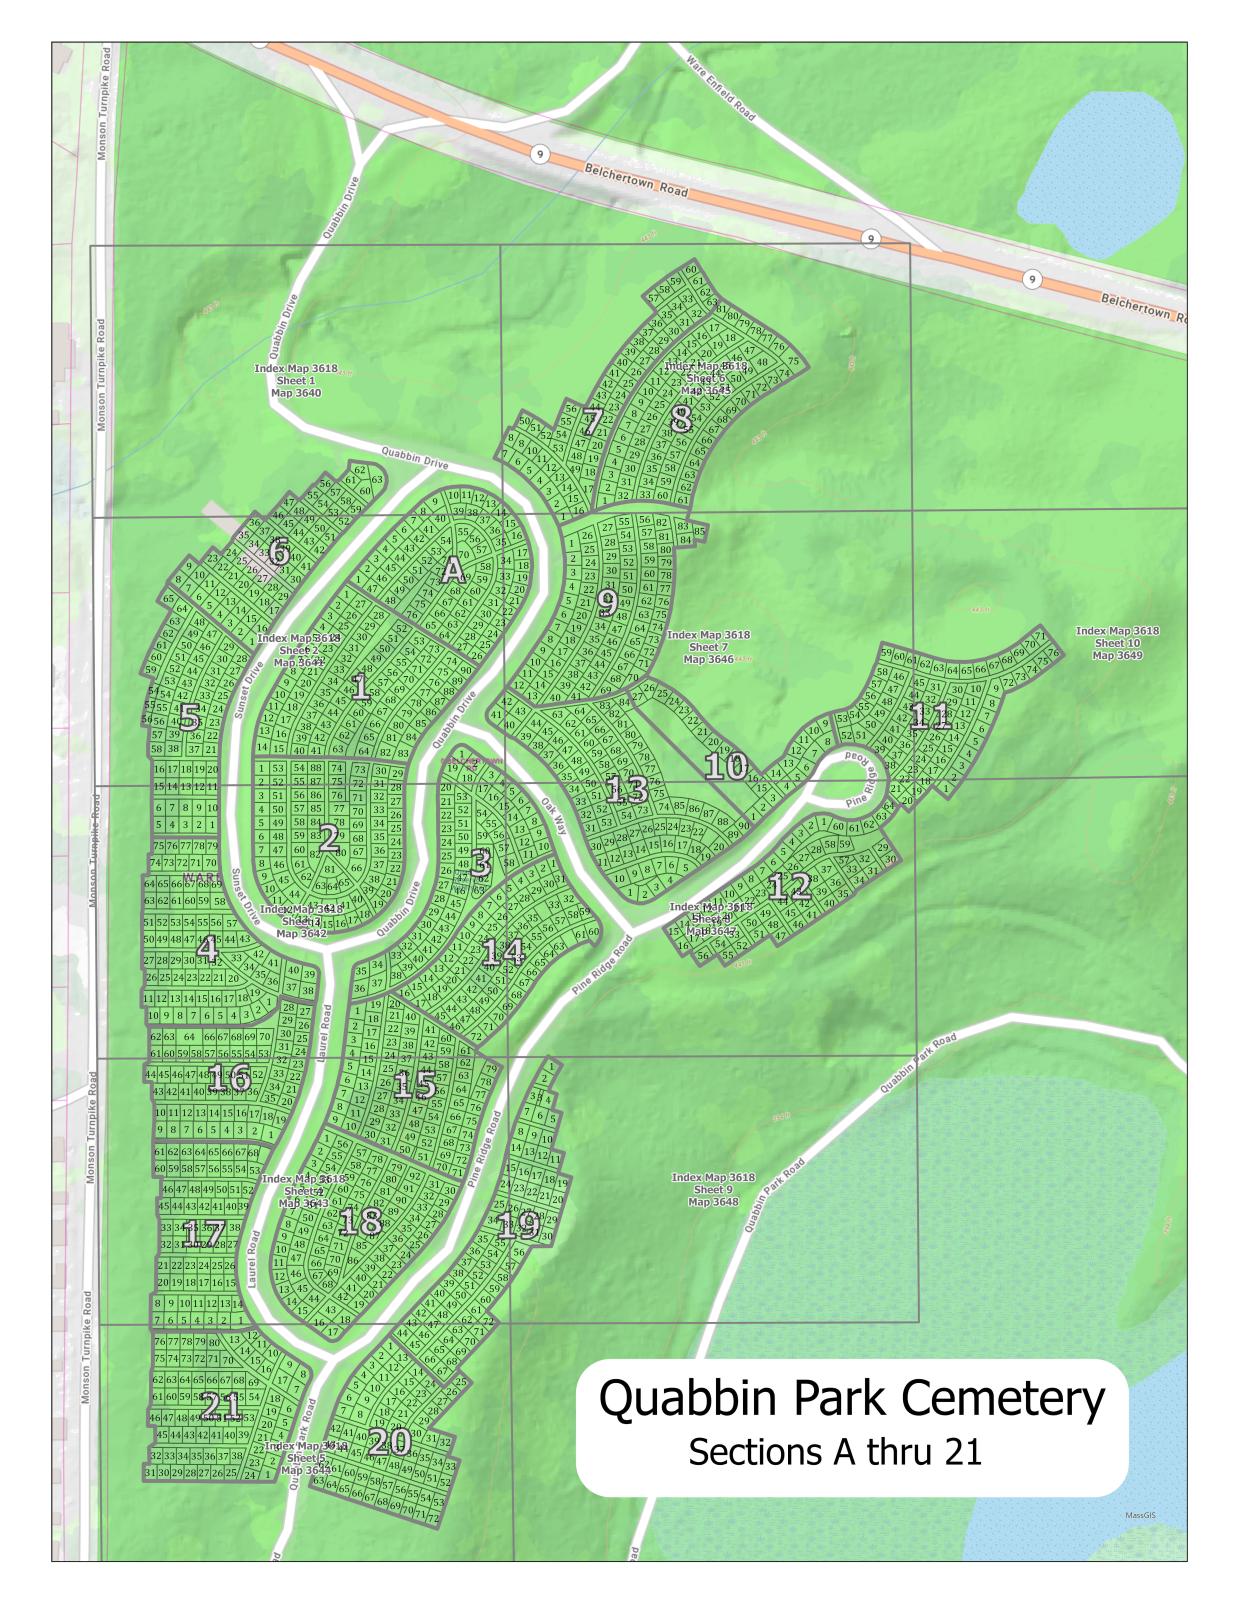 Quabbin Park Cemetery map